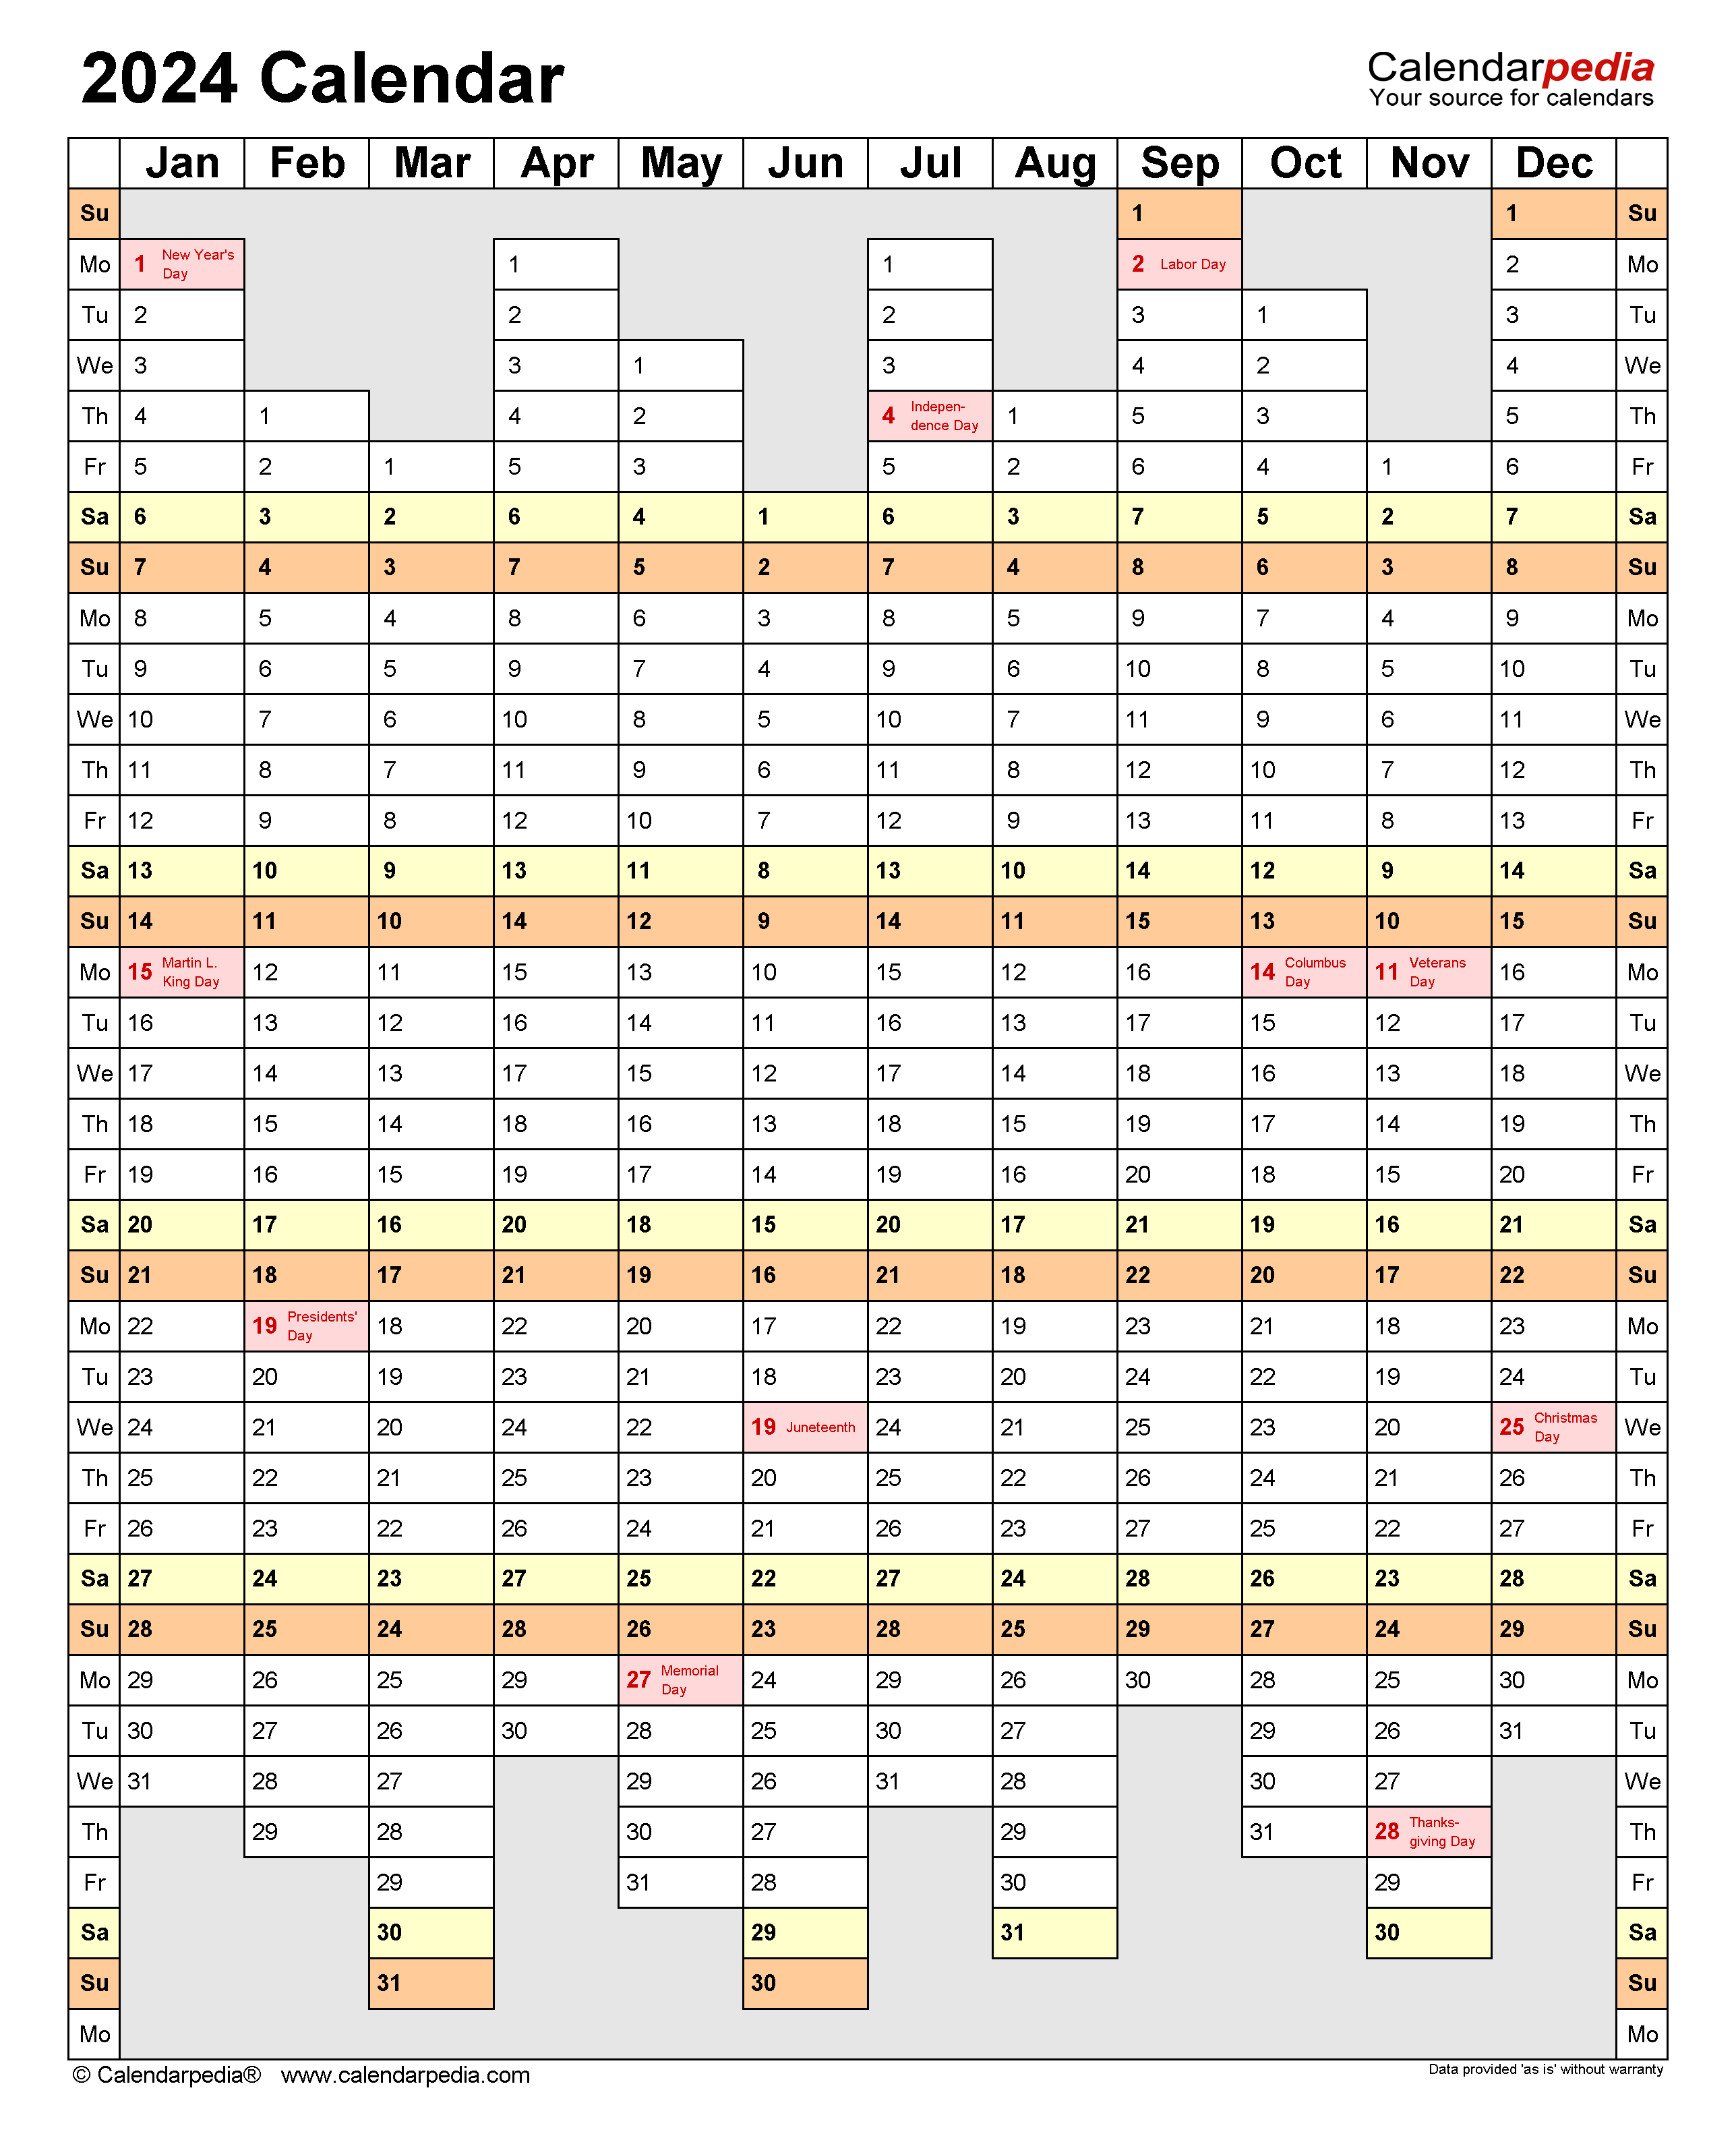 2024 Calendar Template Excel Free Download Calendar 2024 All Holidays - Free Printable 2024 Monthly Calendar Excel